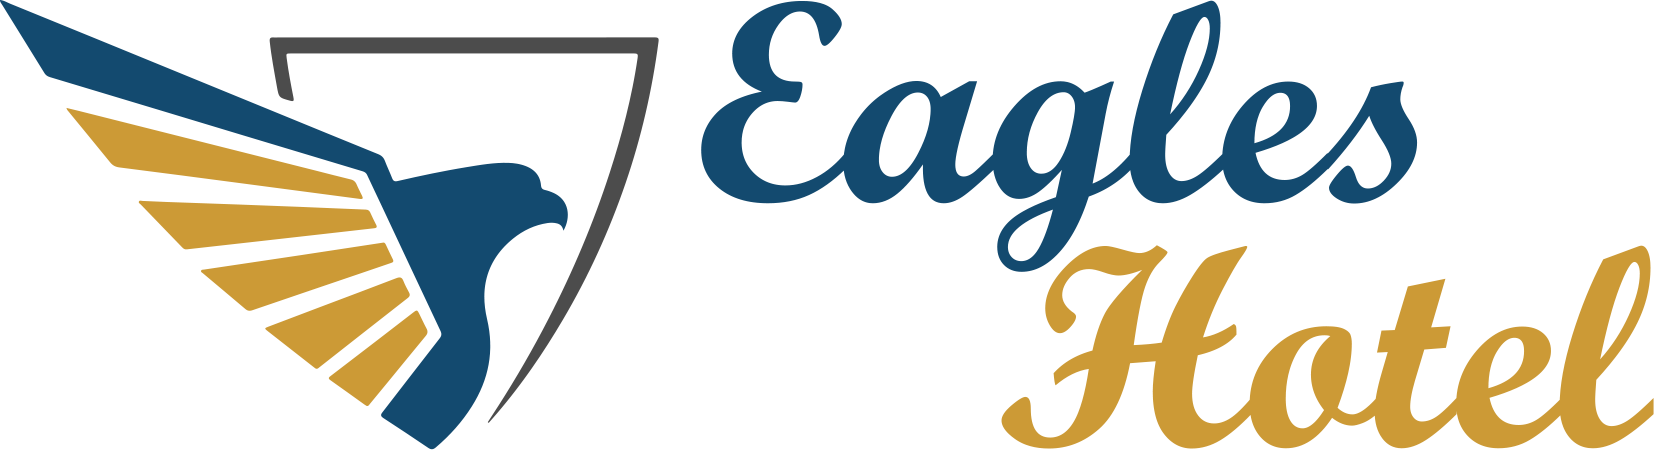 Eagles Hotel Logo